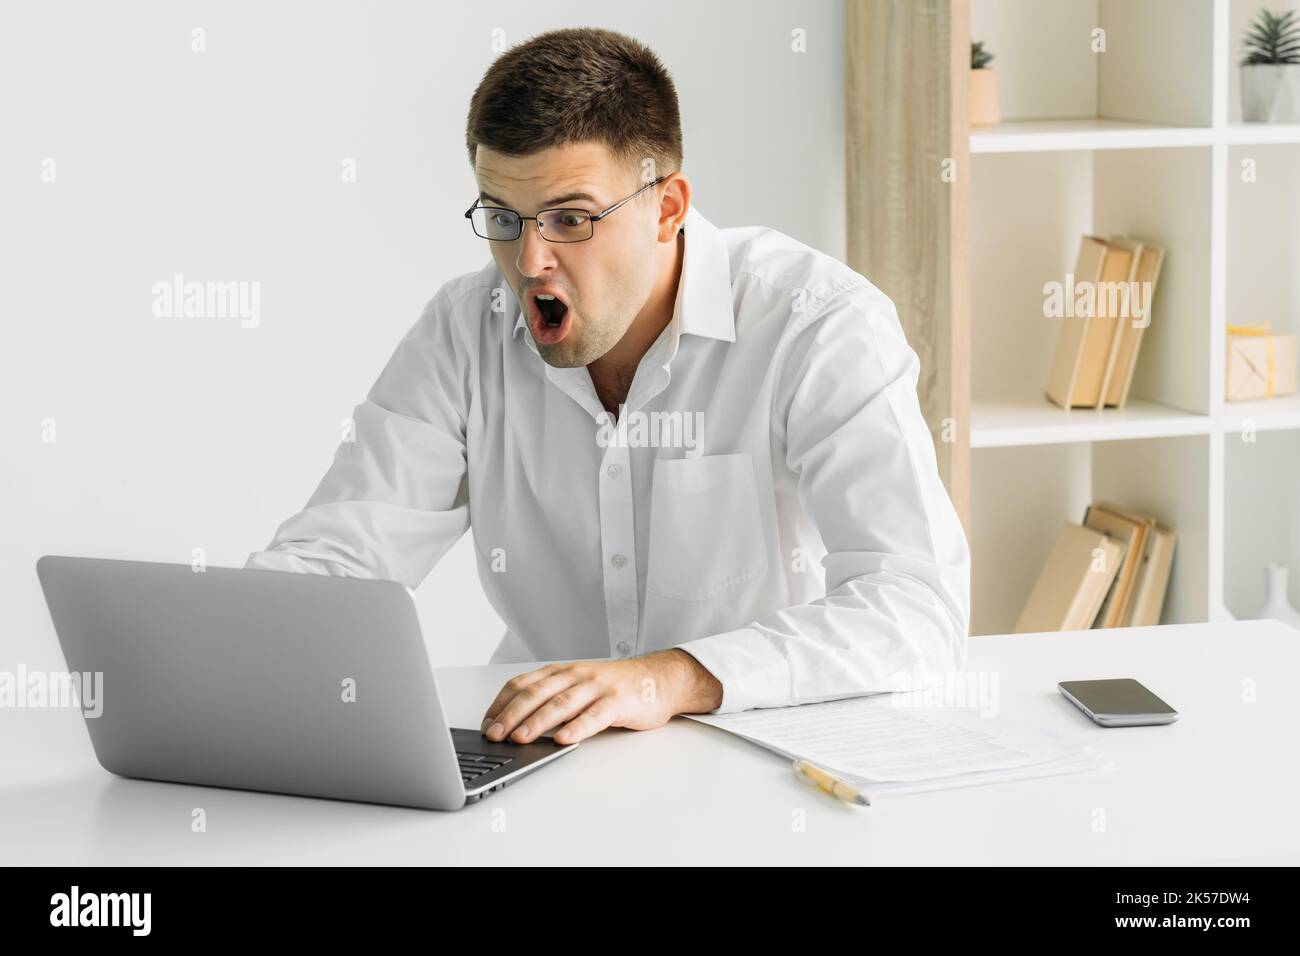 work problem shocked man disbelief expression Stock Photo